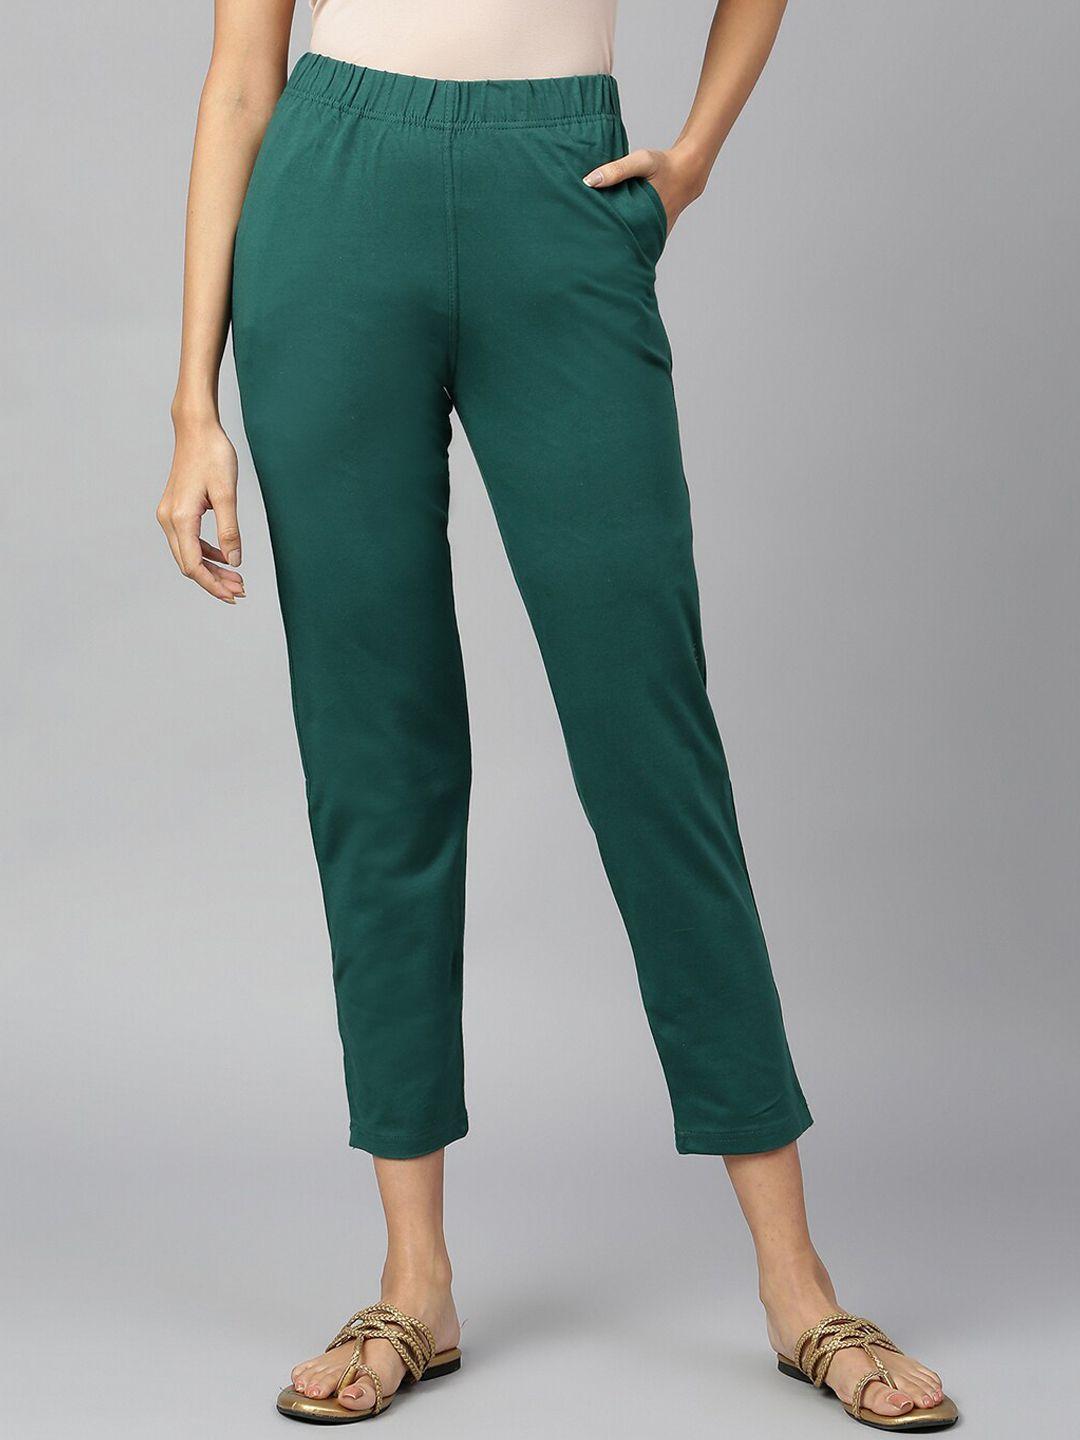 elleven women green cotton solid trousers